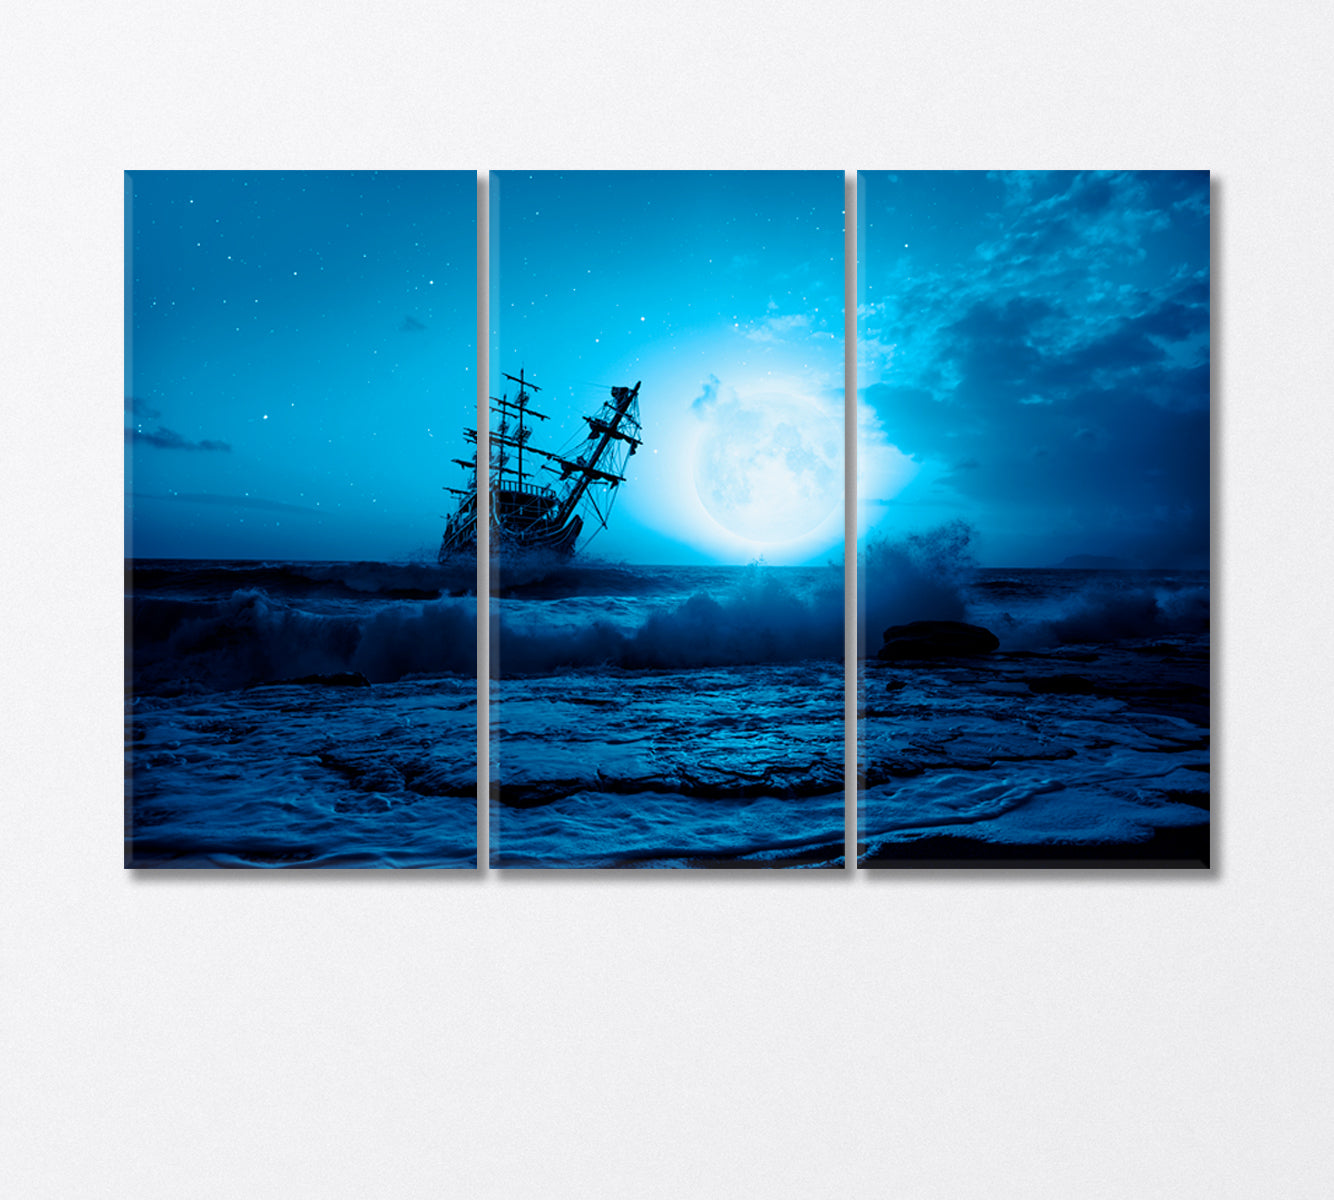 Sailing Old Ship in Stormy Sea at Night Canvas Print-Canvas Print-CetArt-3 Panels-36x24 inches-CetArt